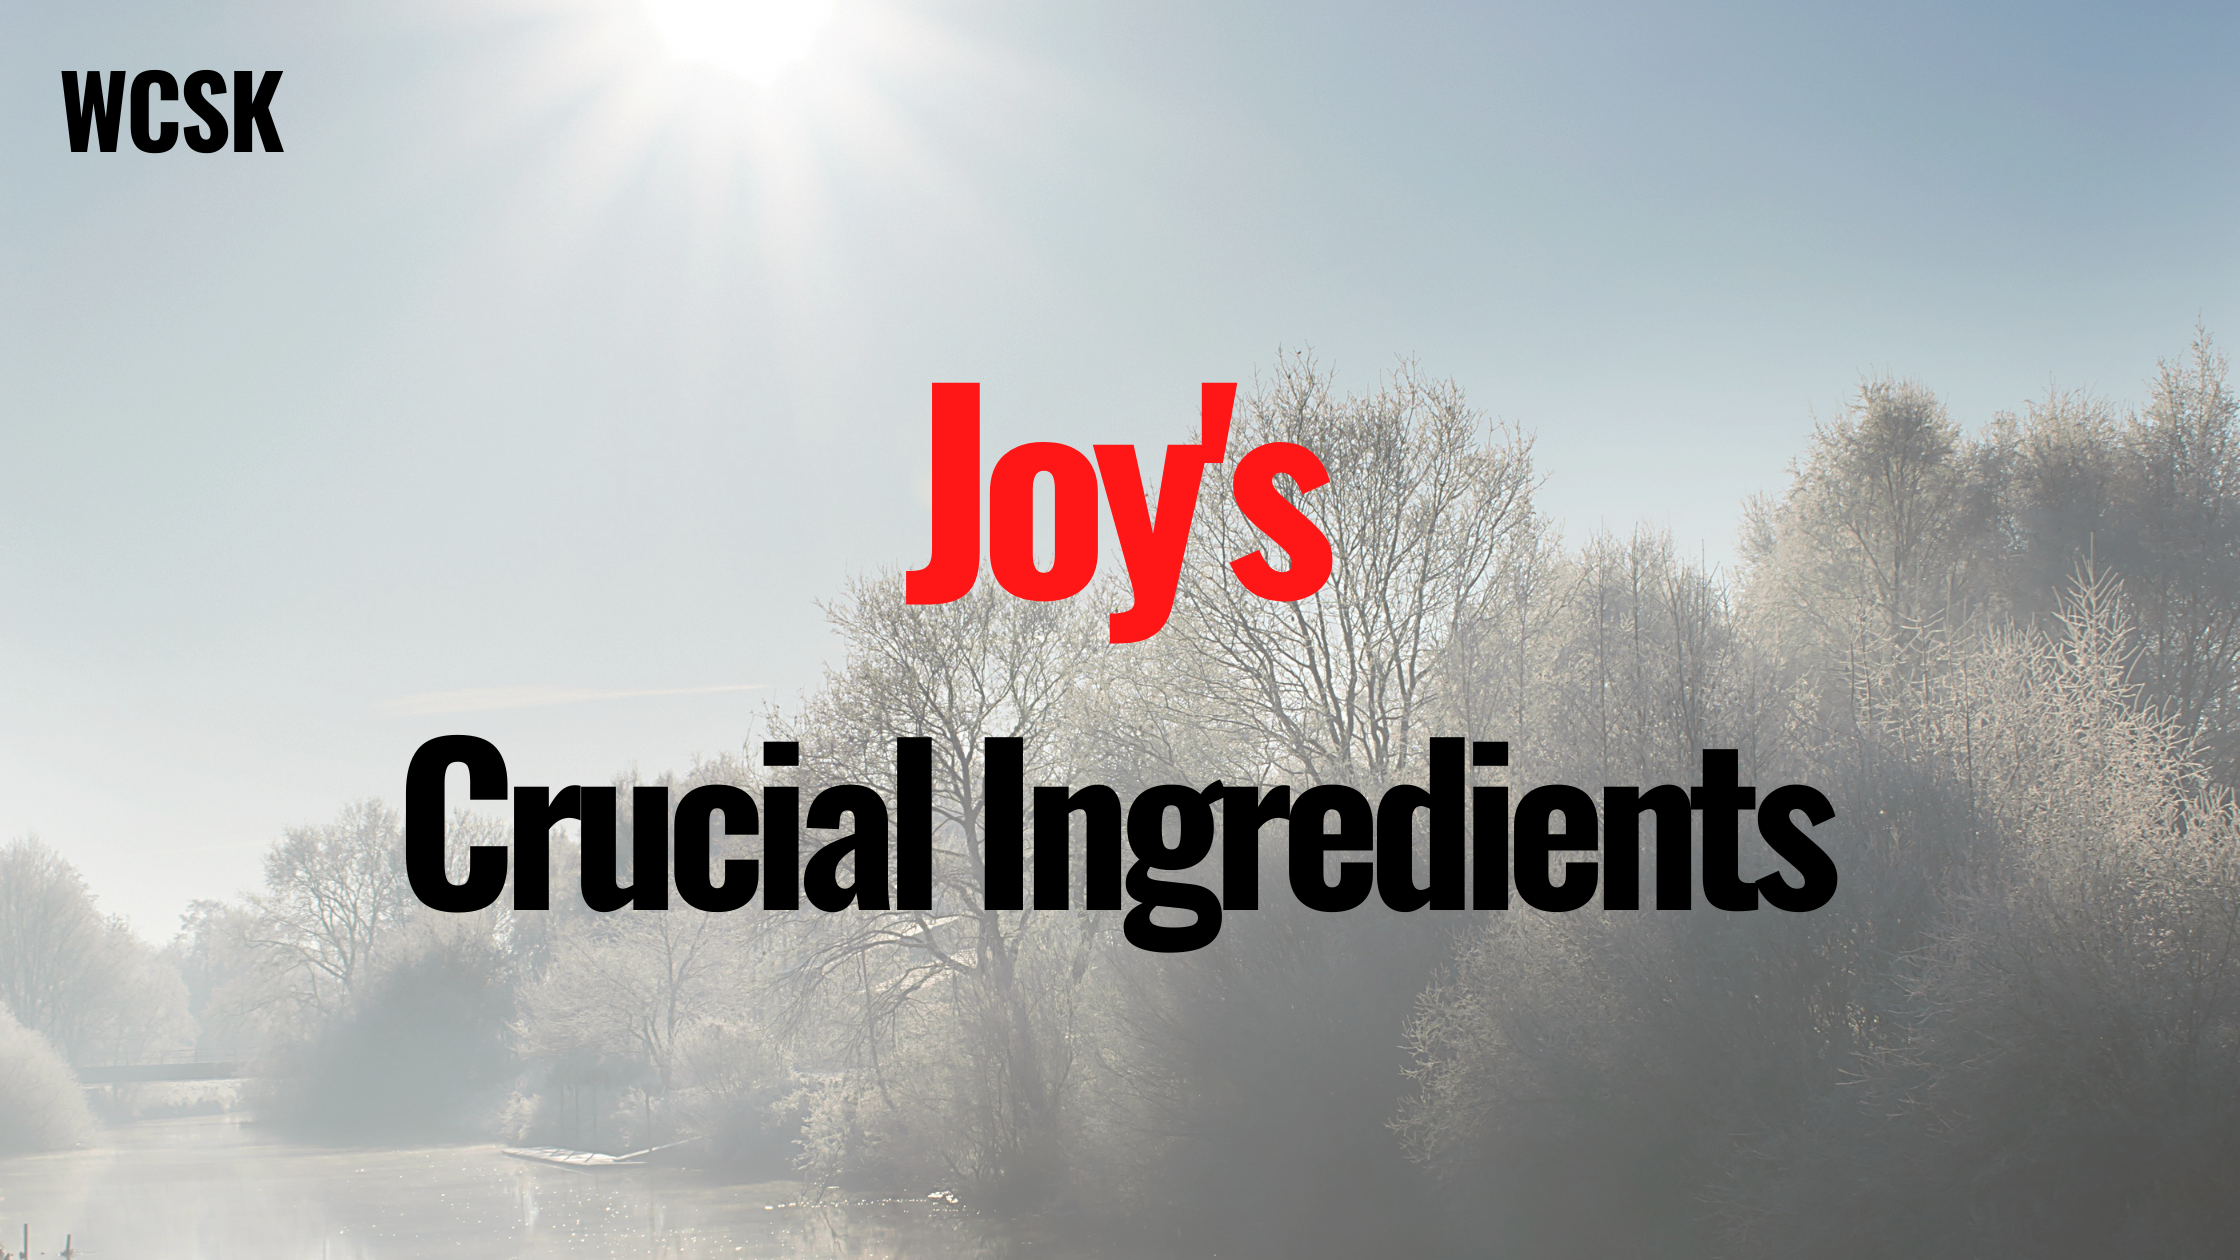 Joy’s Crucial Ingredients